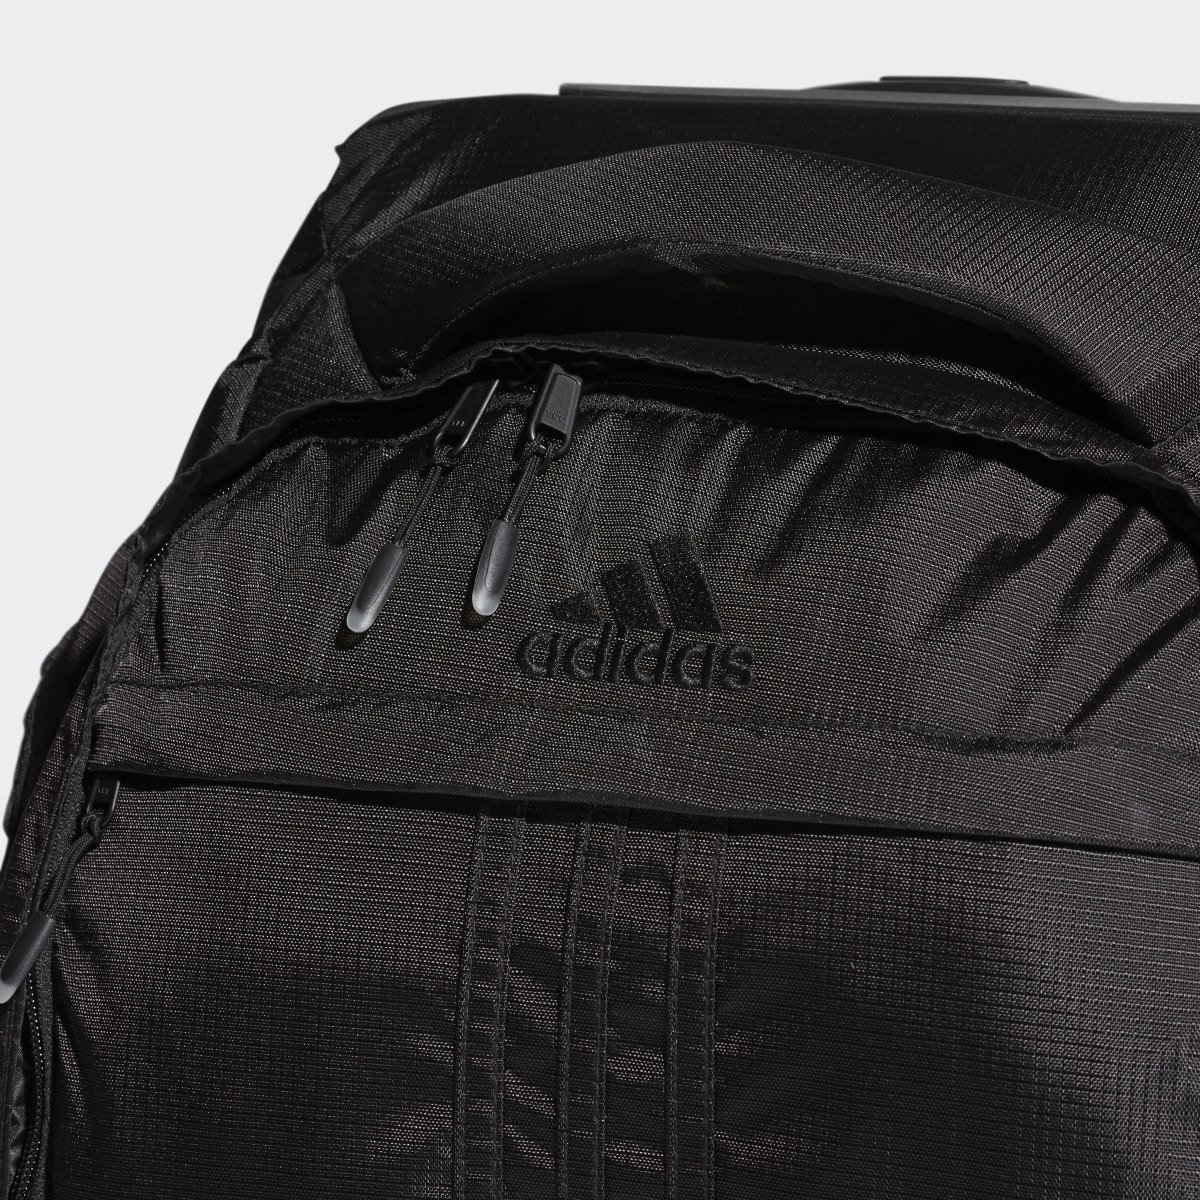 Adidas Duel 21-Inch Wheel Bag. 6